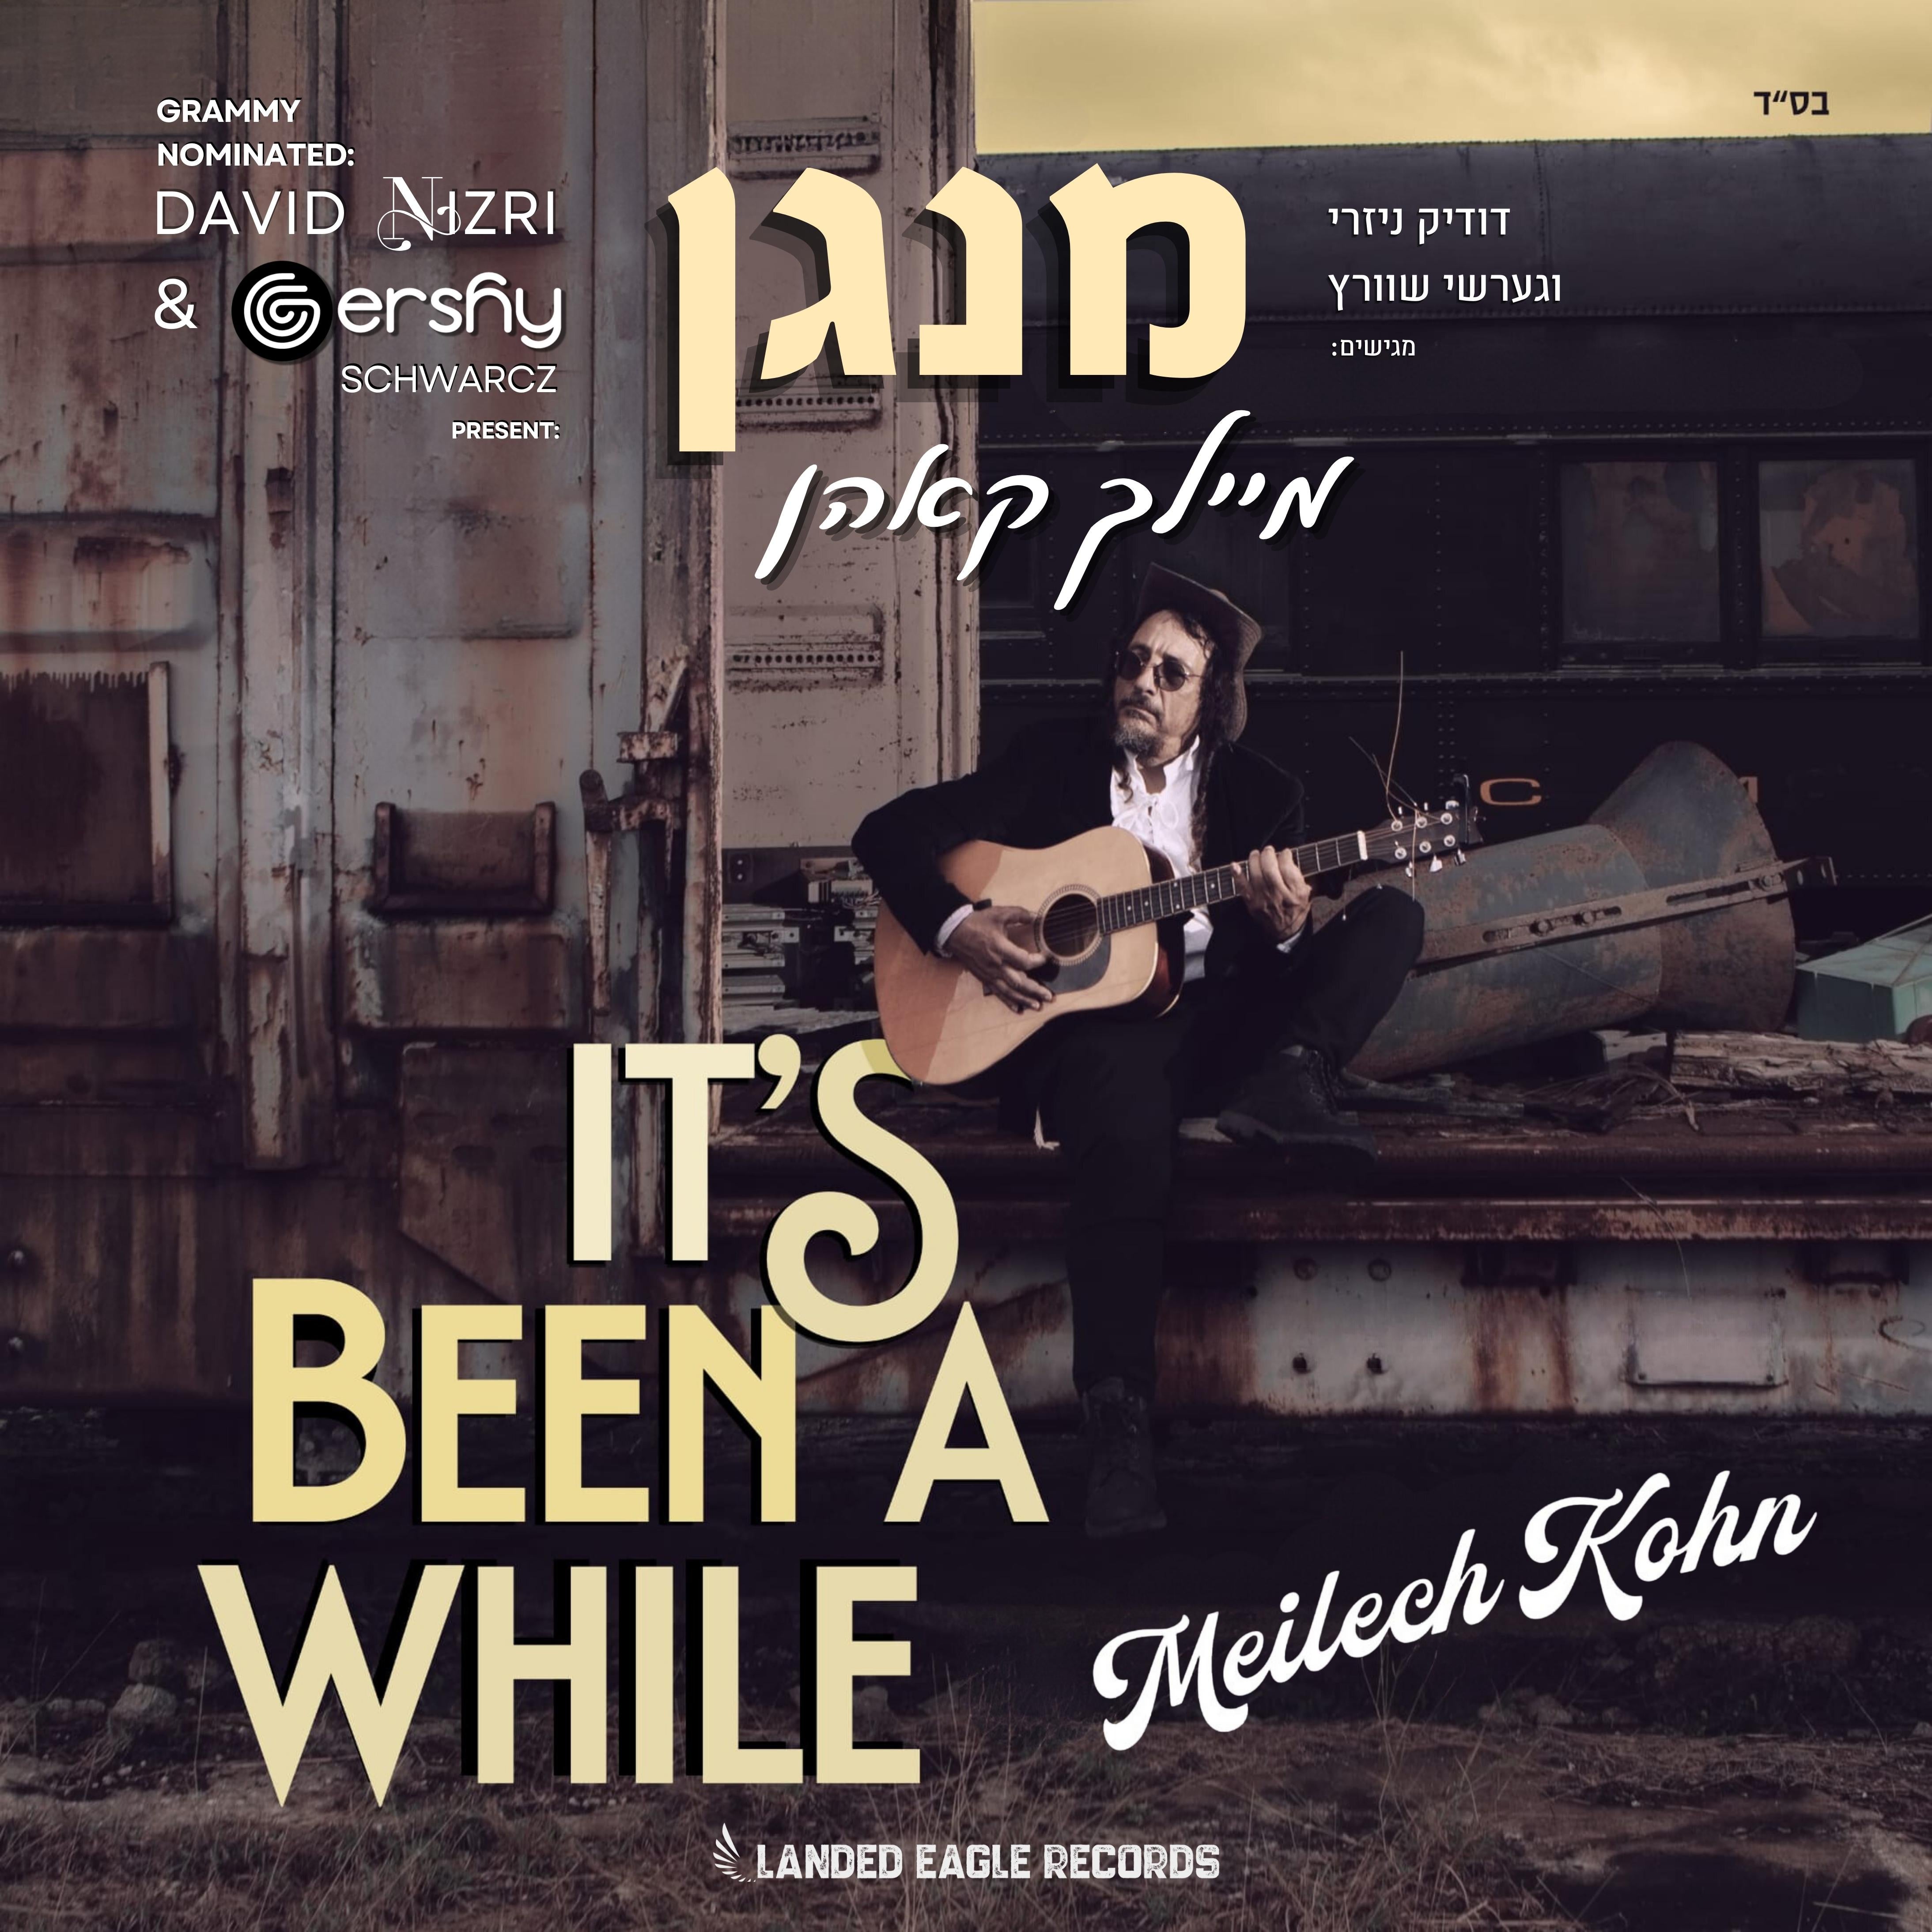 Meilech Kohn - It's Been A While